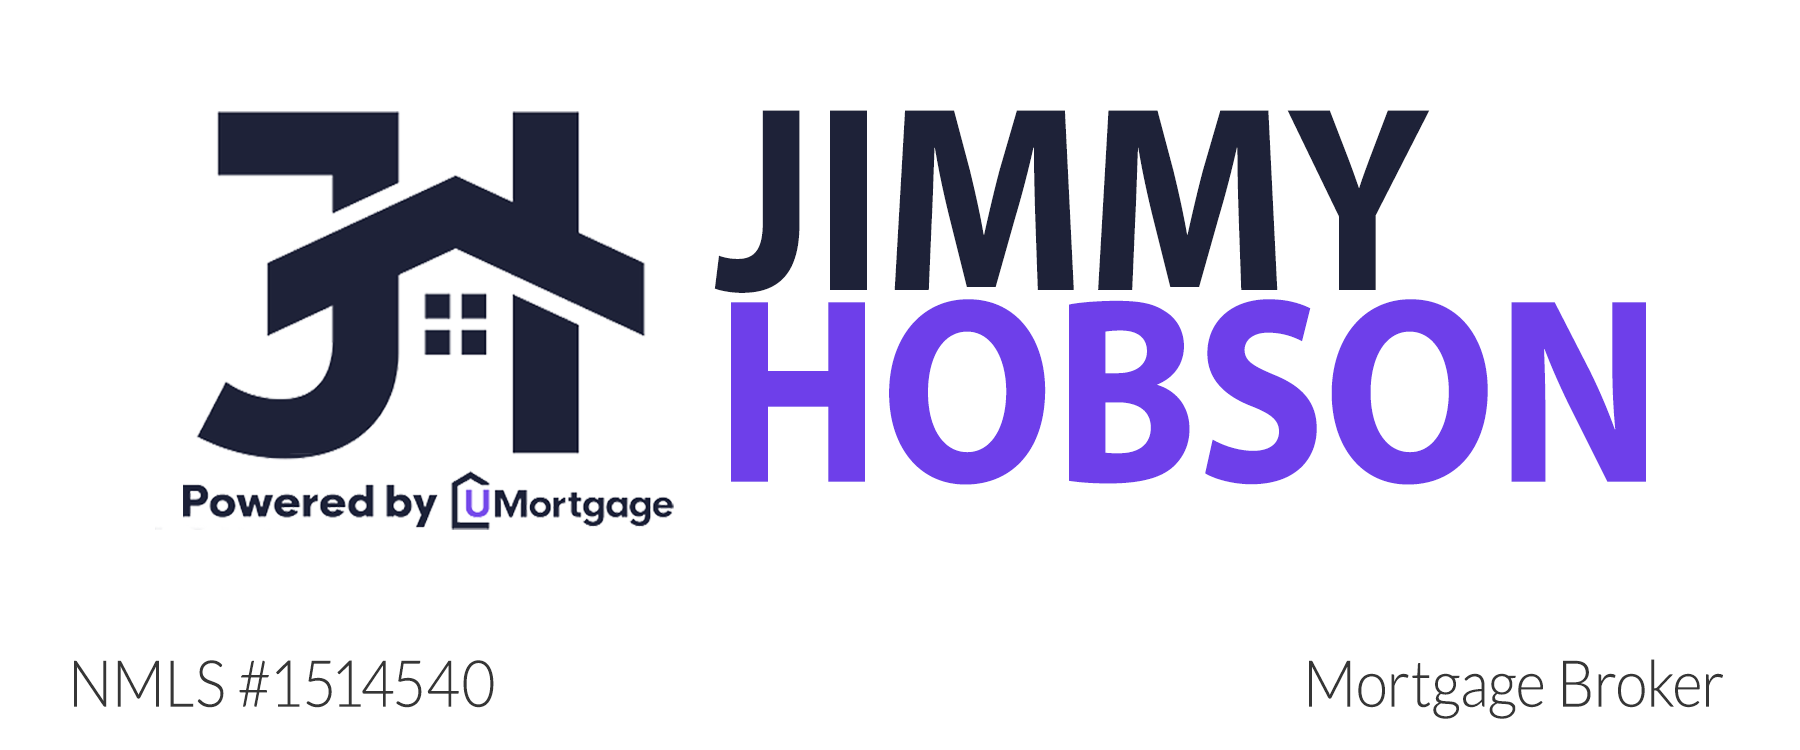 Jimmy Hobson Logo